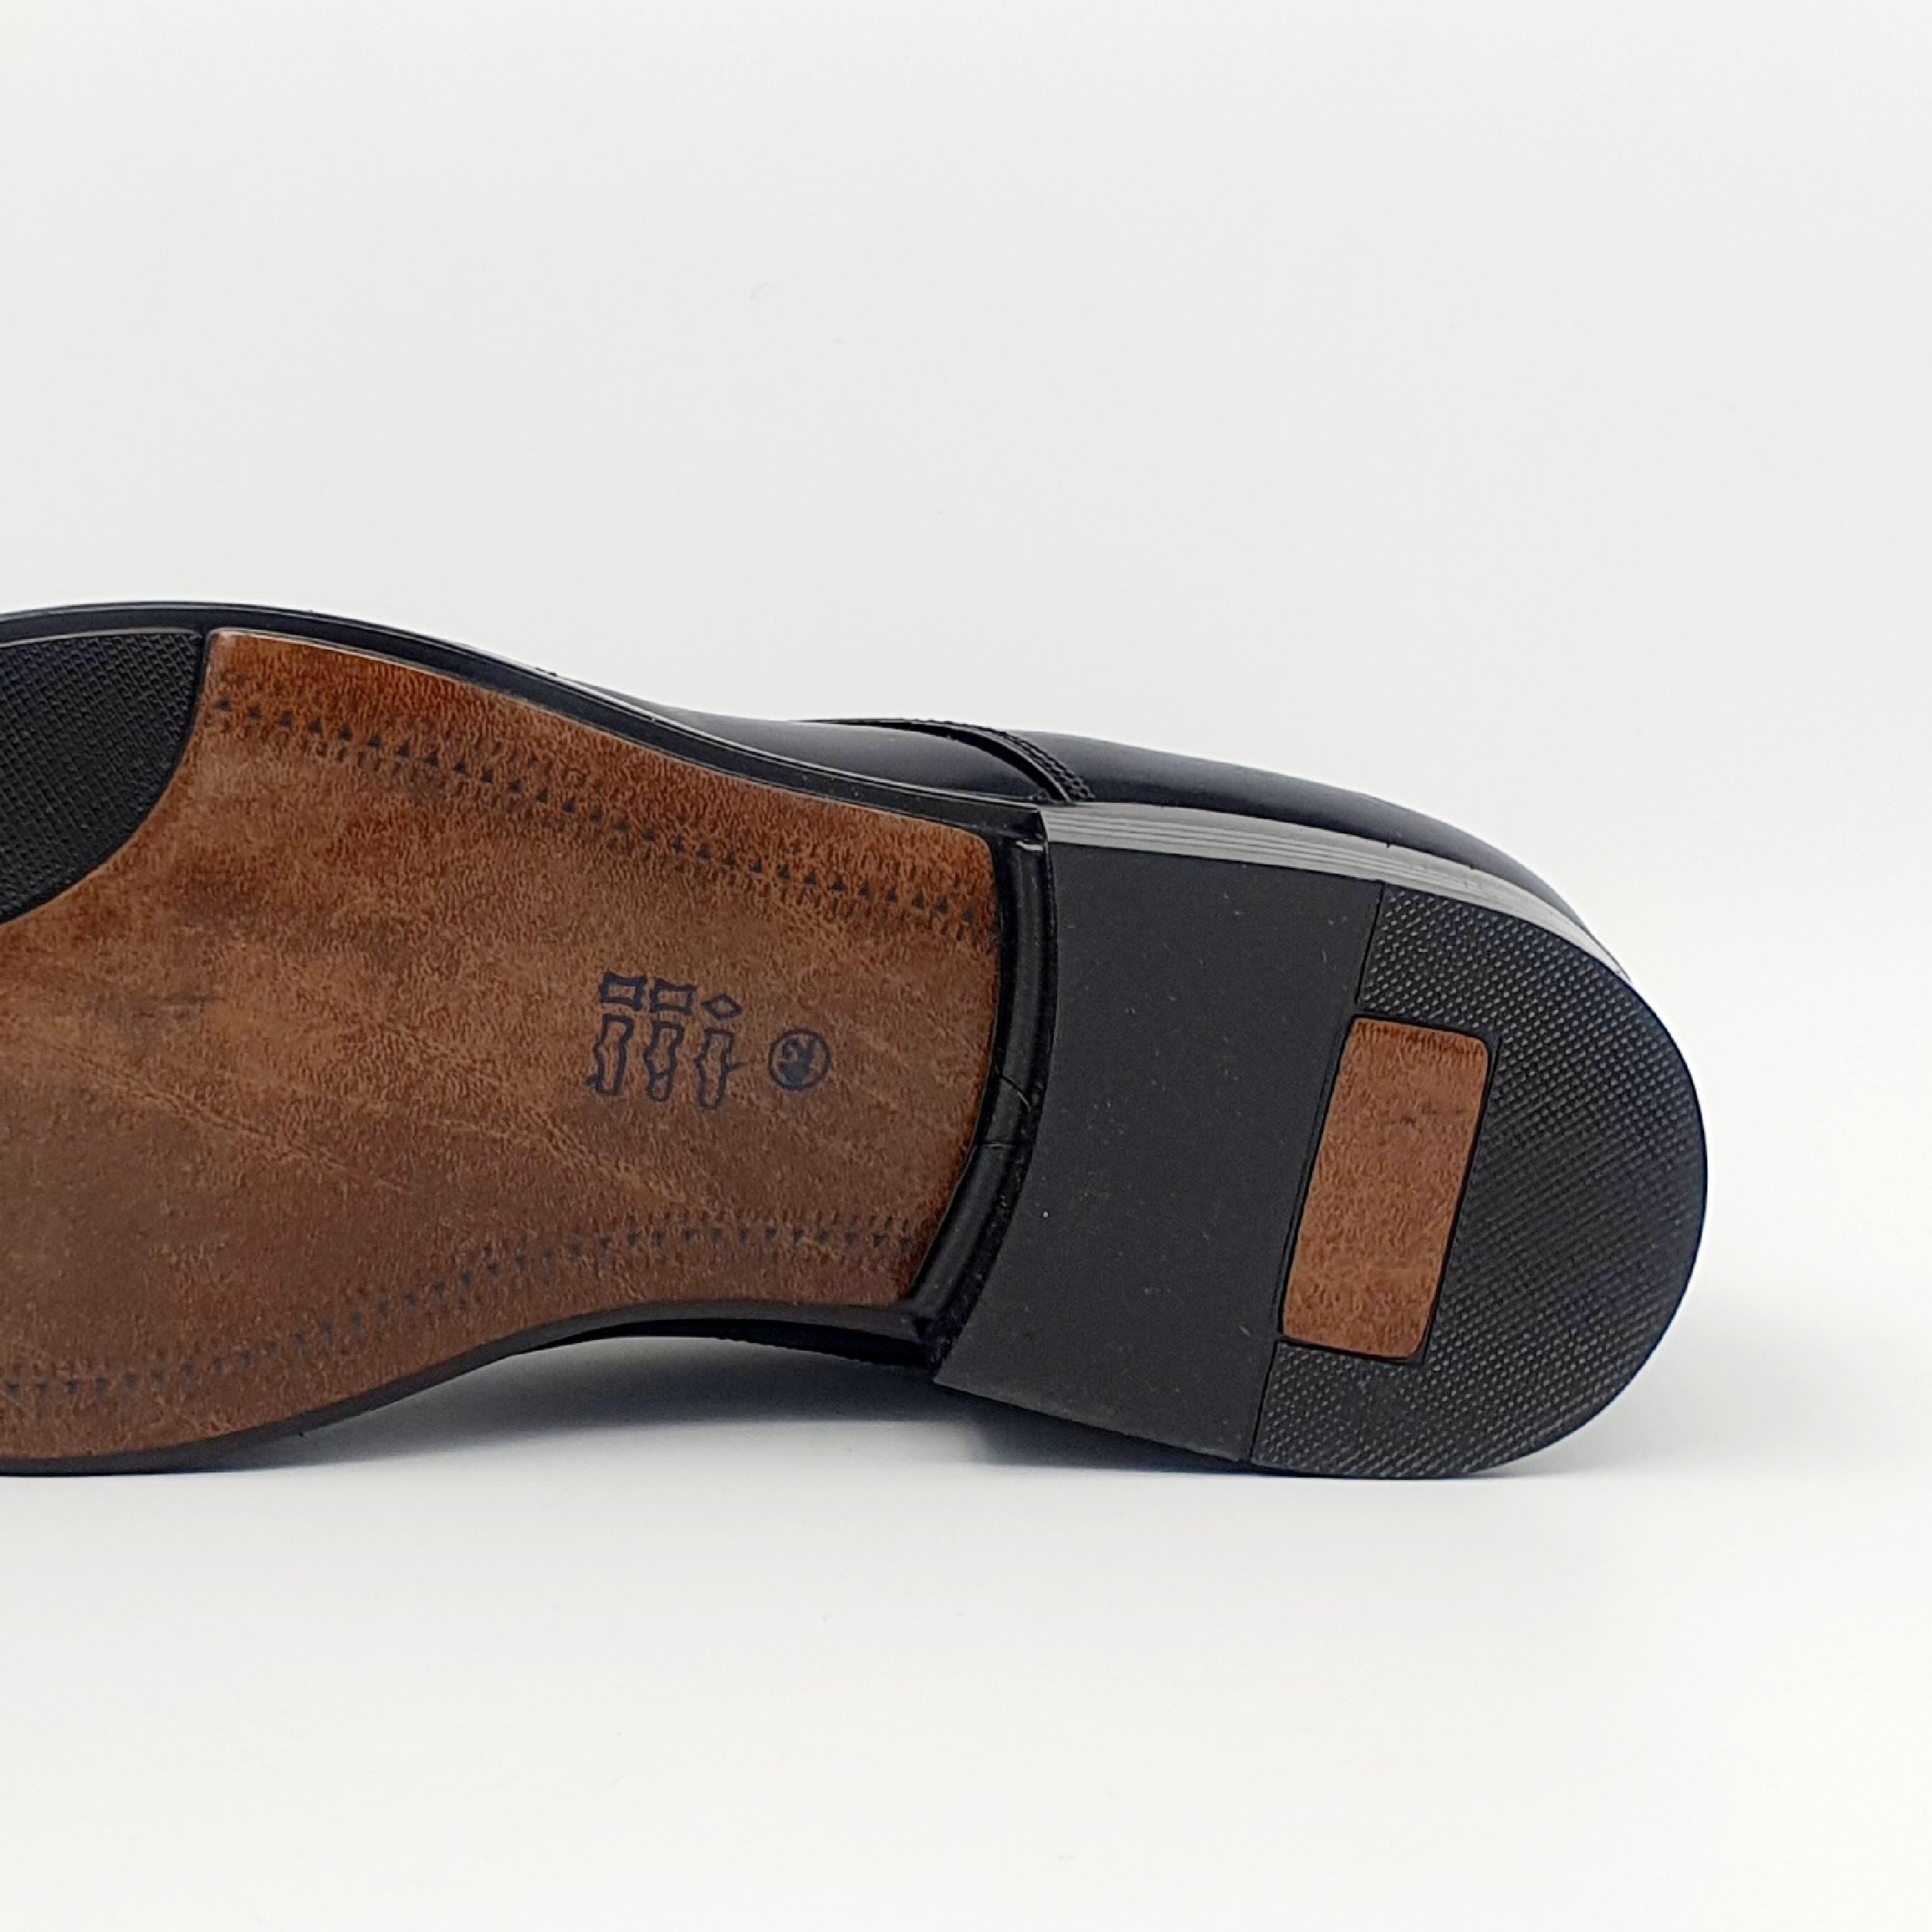 کفش مردانه گالا مدل BS کد D1109 -  - 9